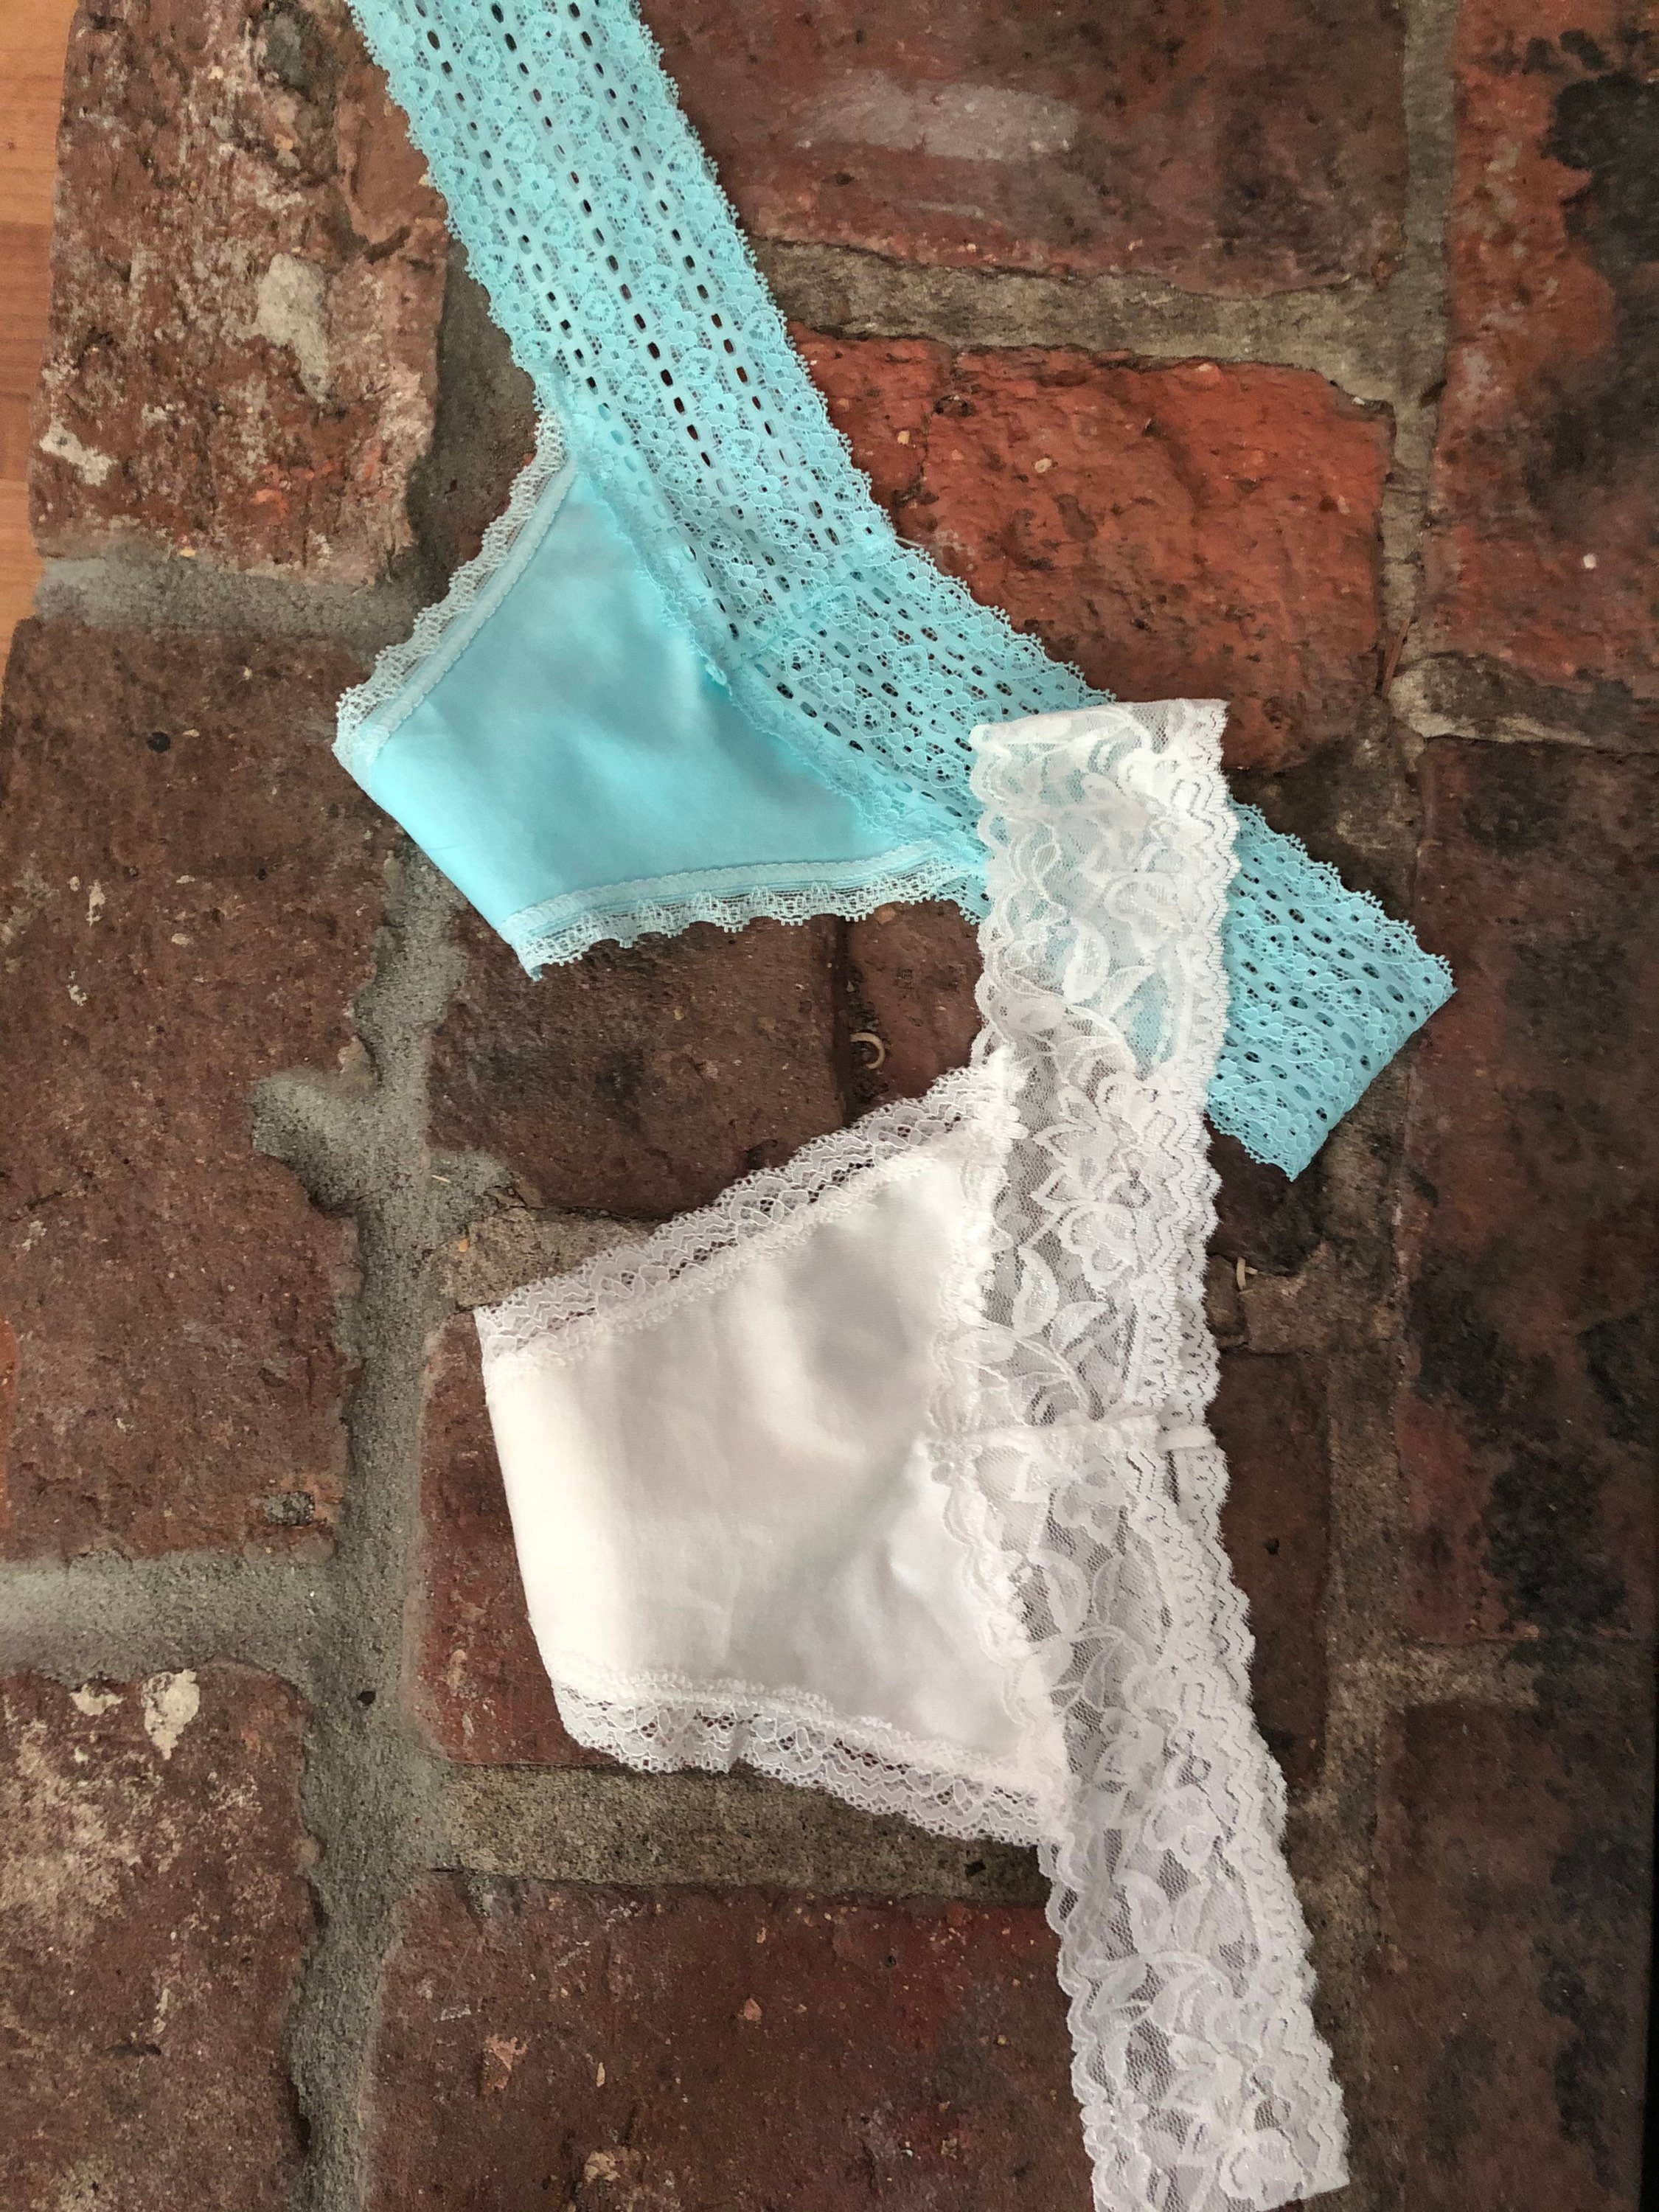 Personalized Bride Underwear Custom Thong Panties: Mrs. Last Name Year  Something Blue Bridal Shower Gifts Monogrammed Lingerie Set -  Canada